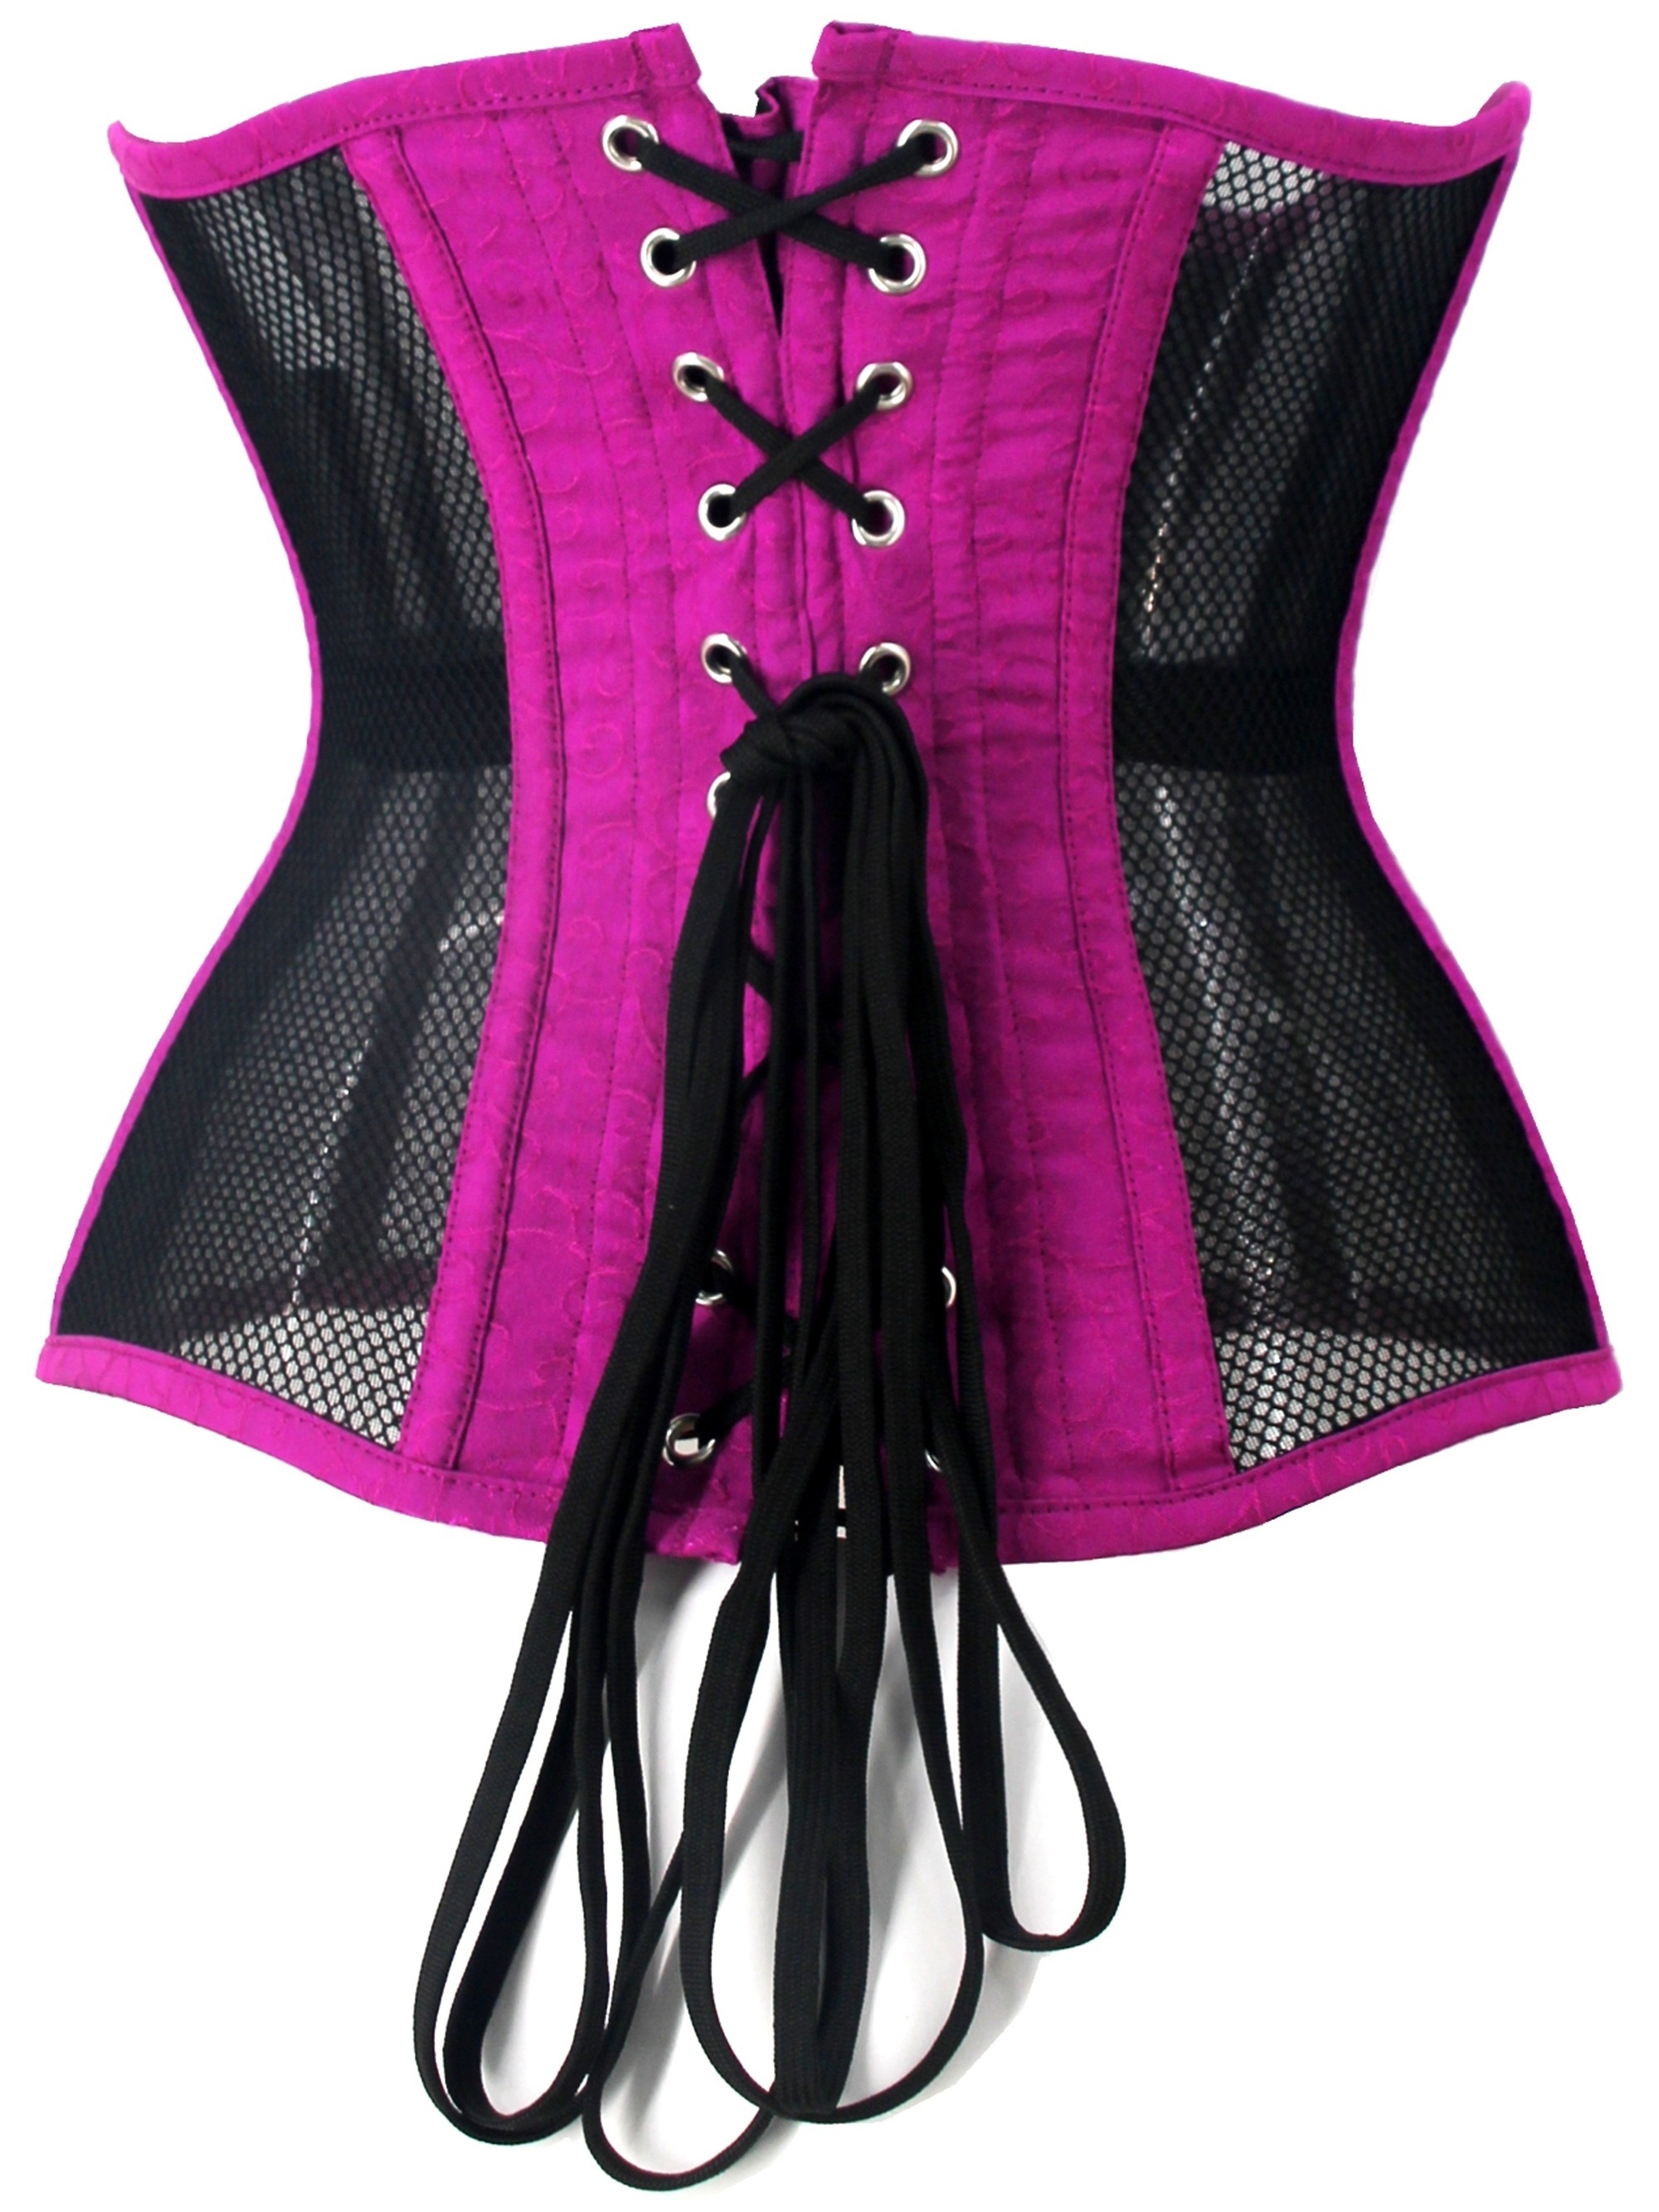 Body slimming corset – traviesomv